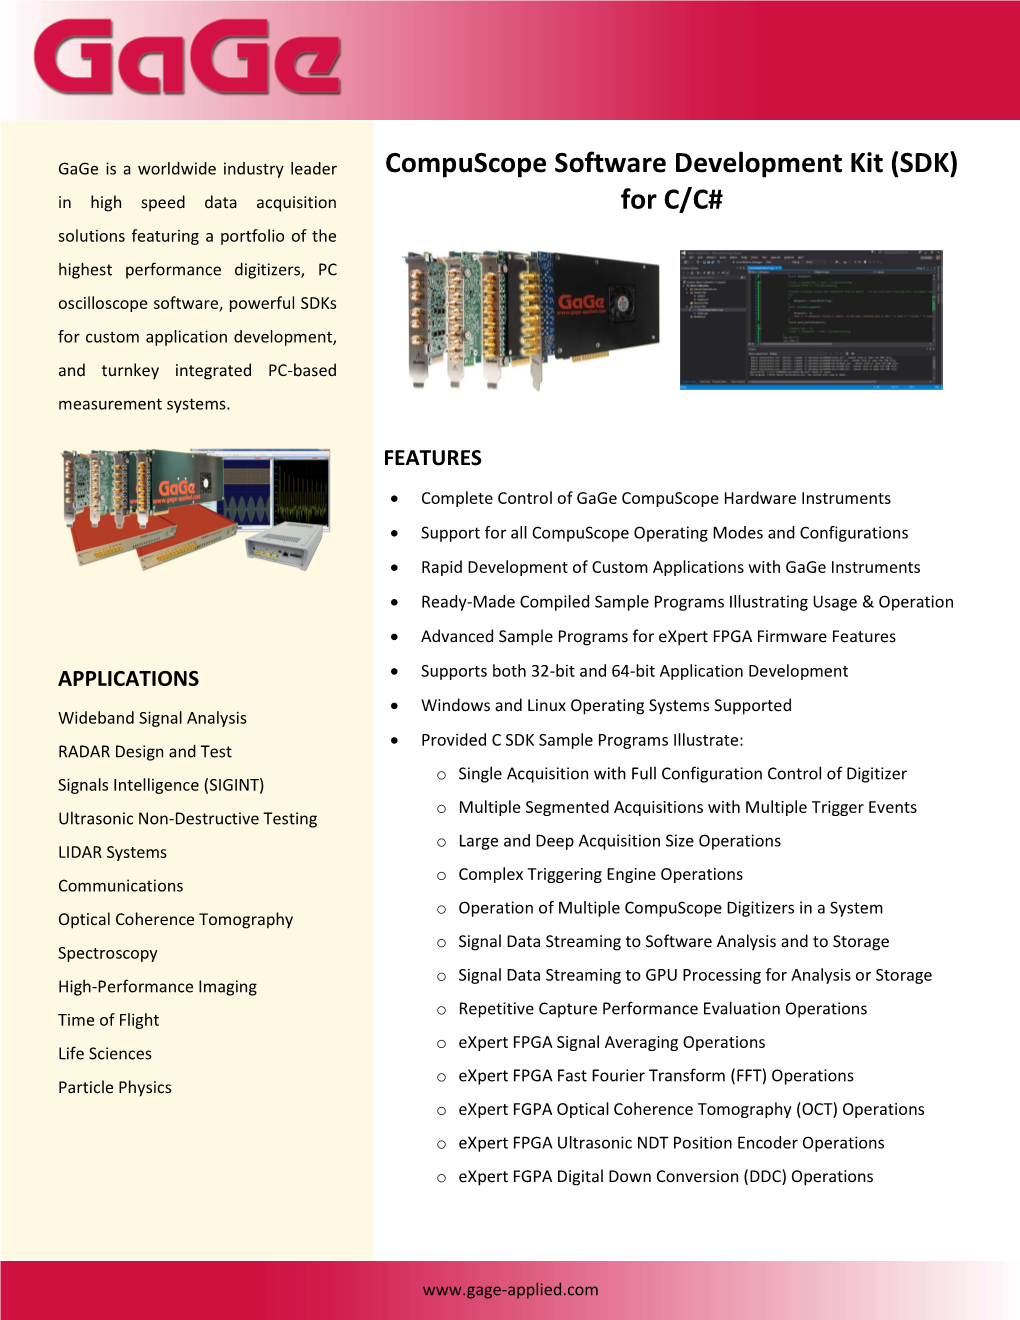 Gage Compuscope Software Development Kit for C/C# Datasheet